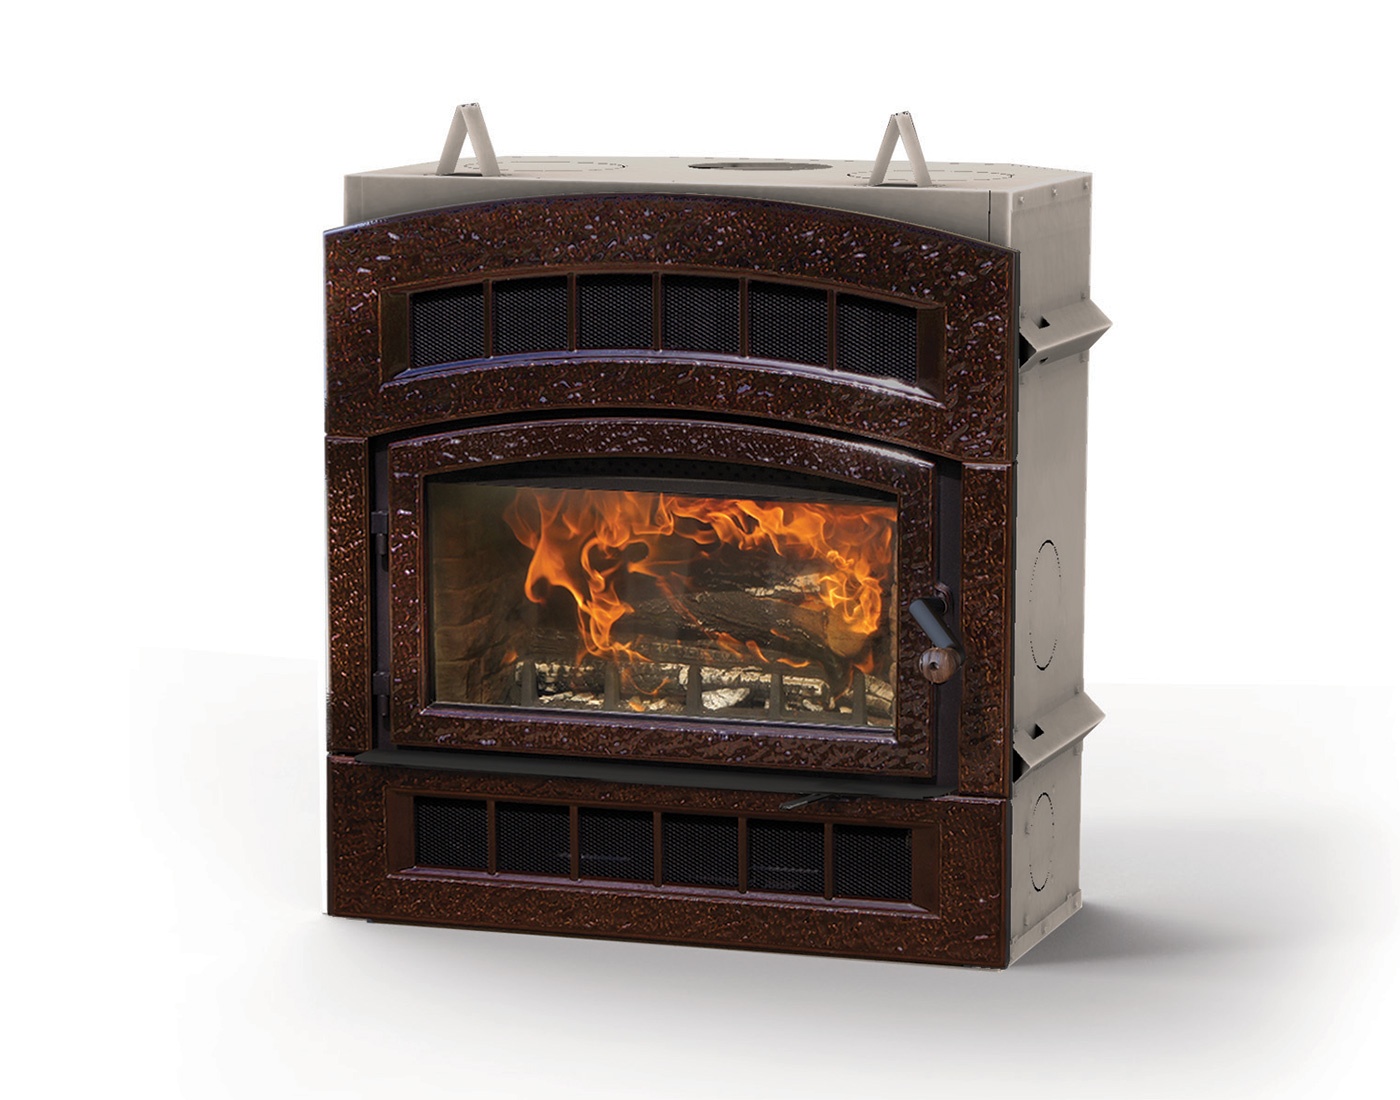 Hearthstone WFP75 Wood Burning Fireplace in brown enamel